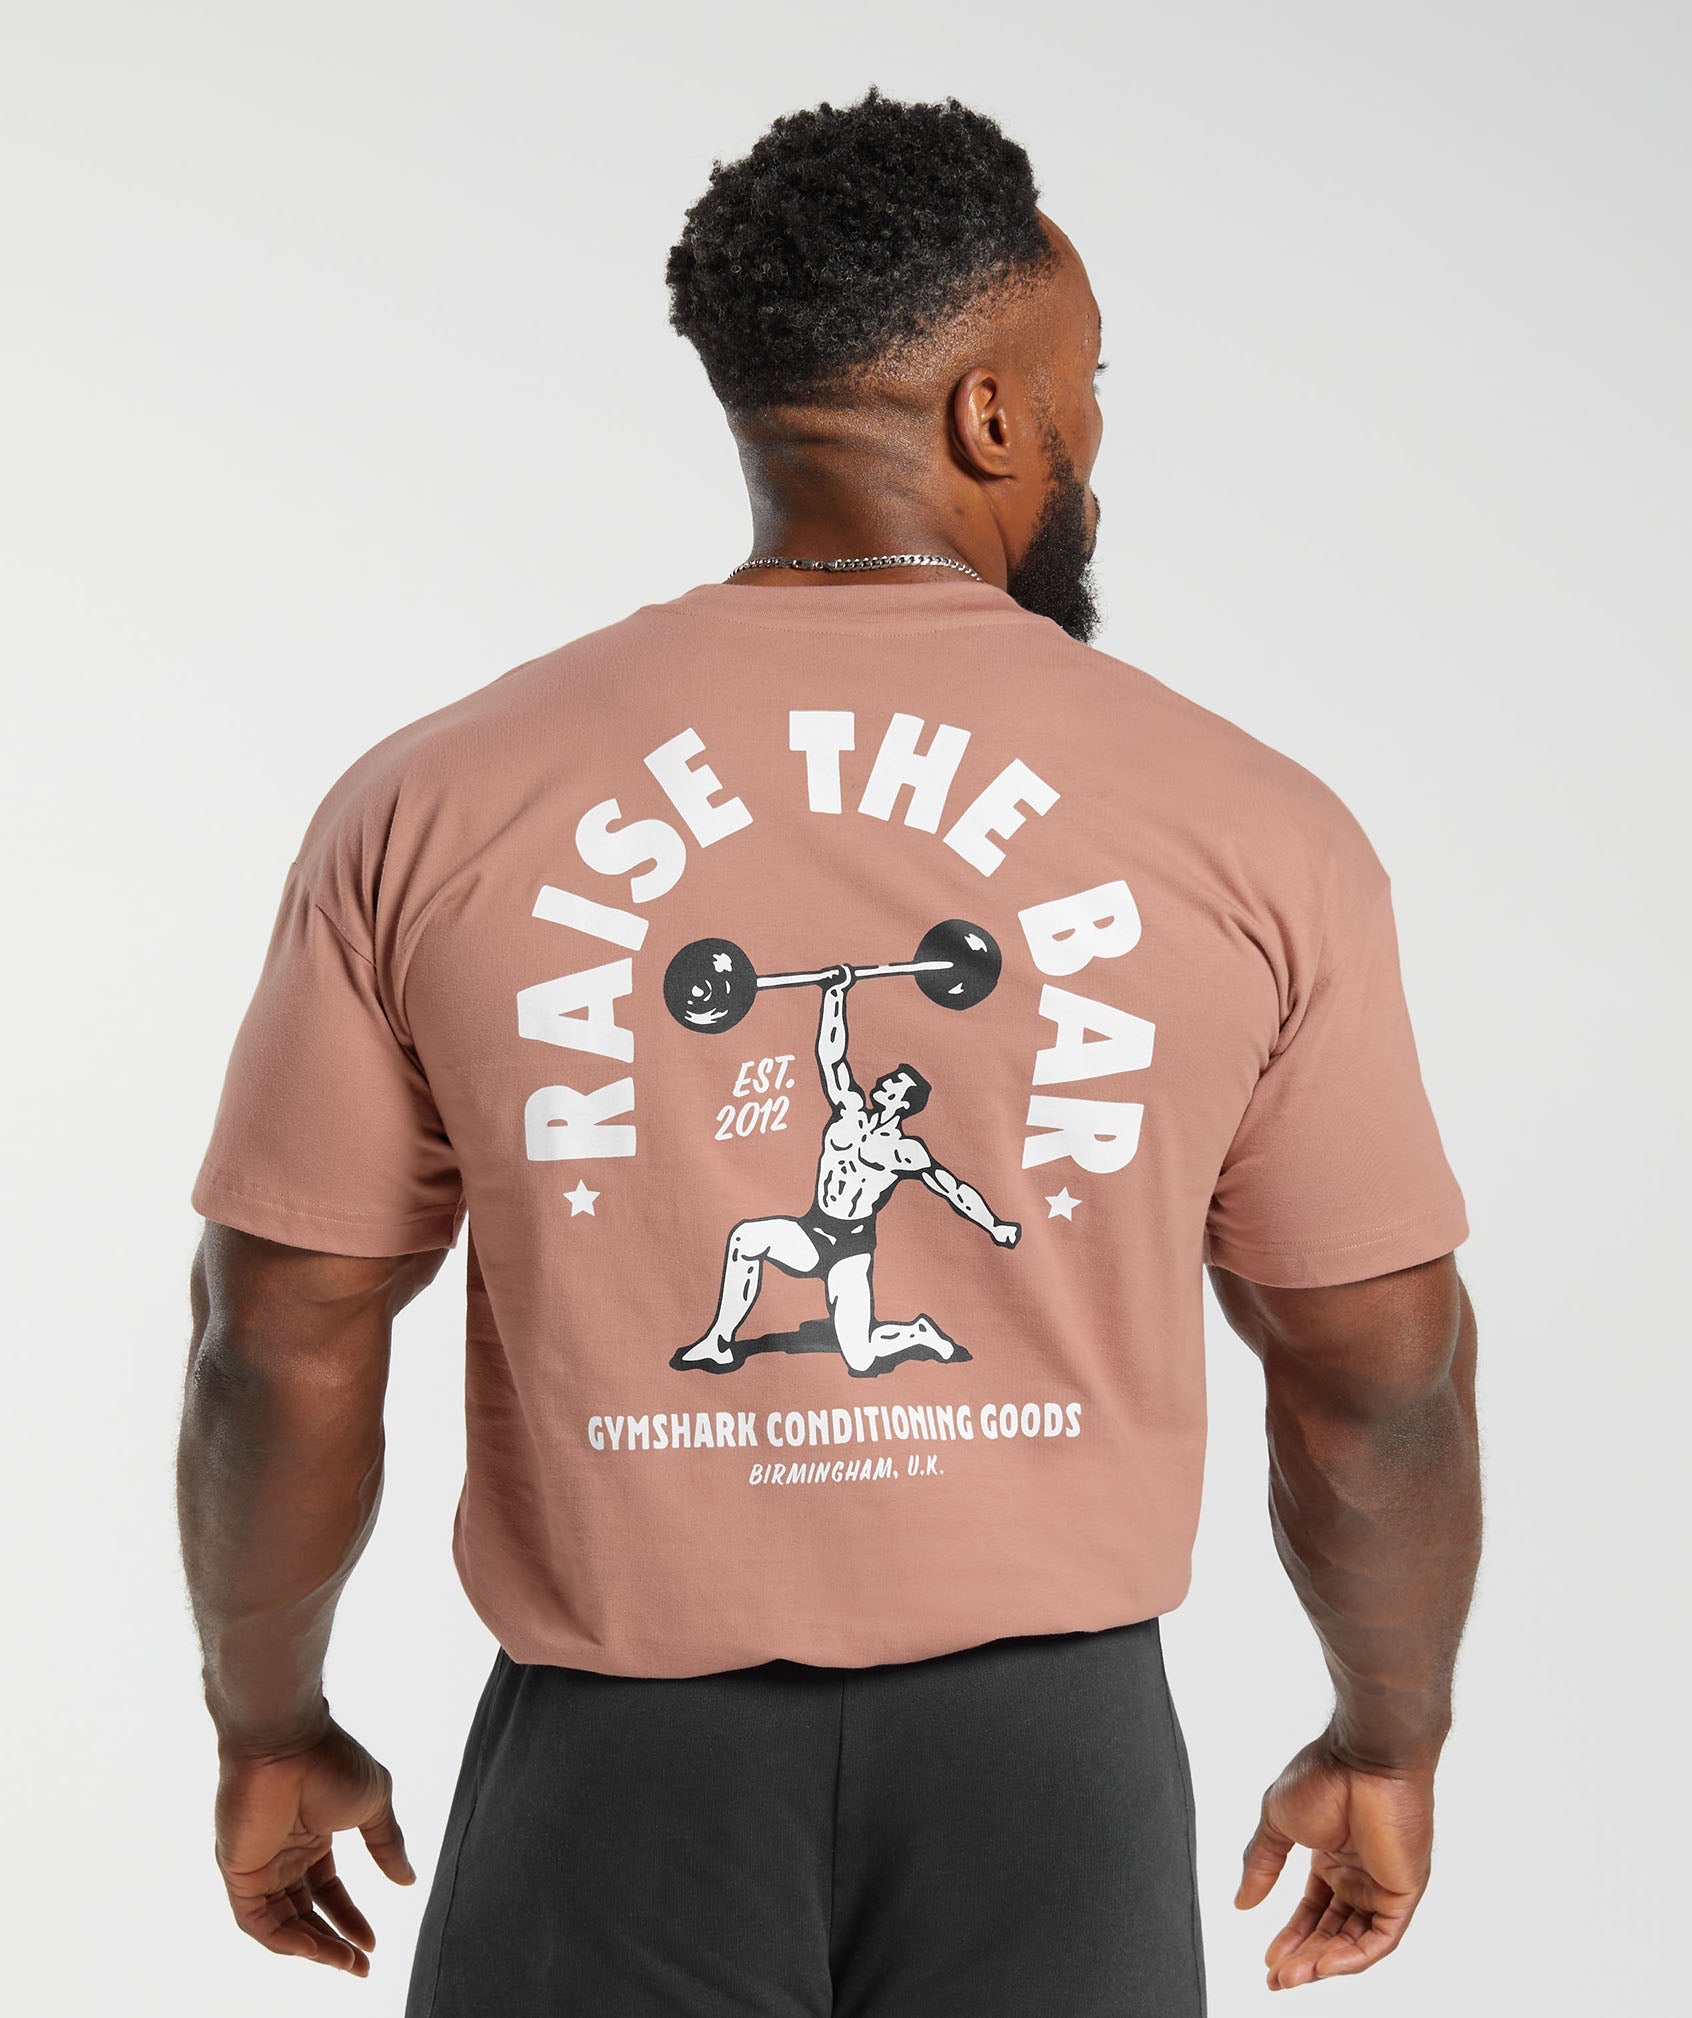 Raise the Bar T-Shirt